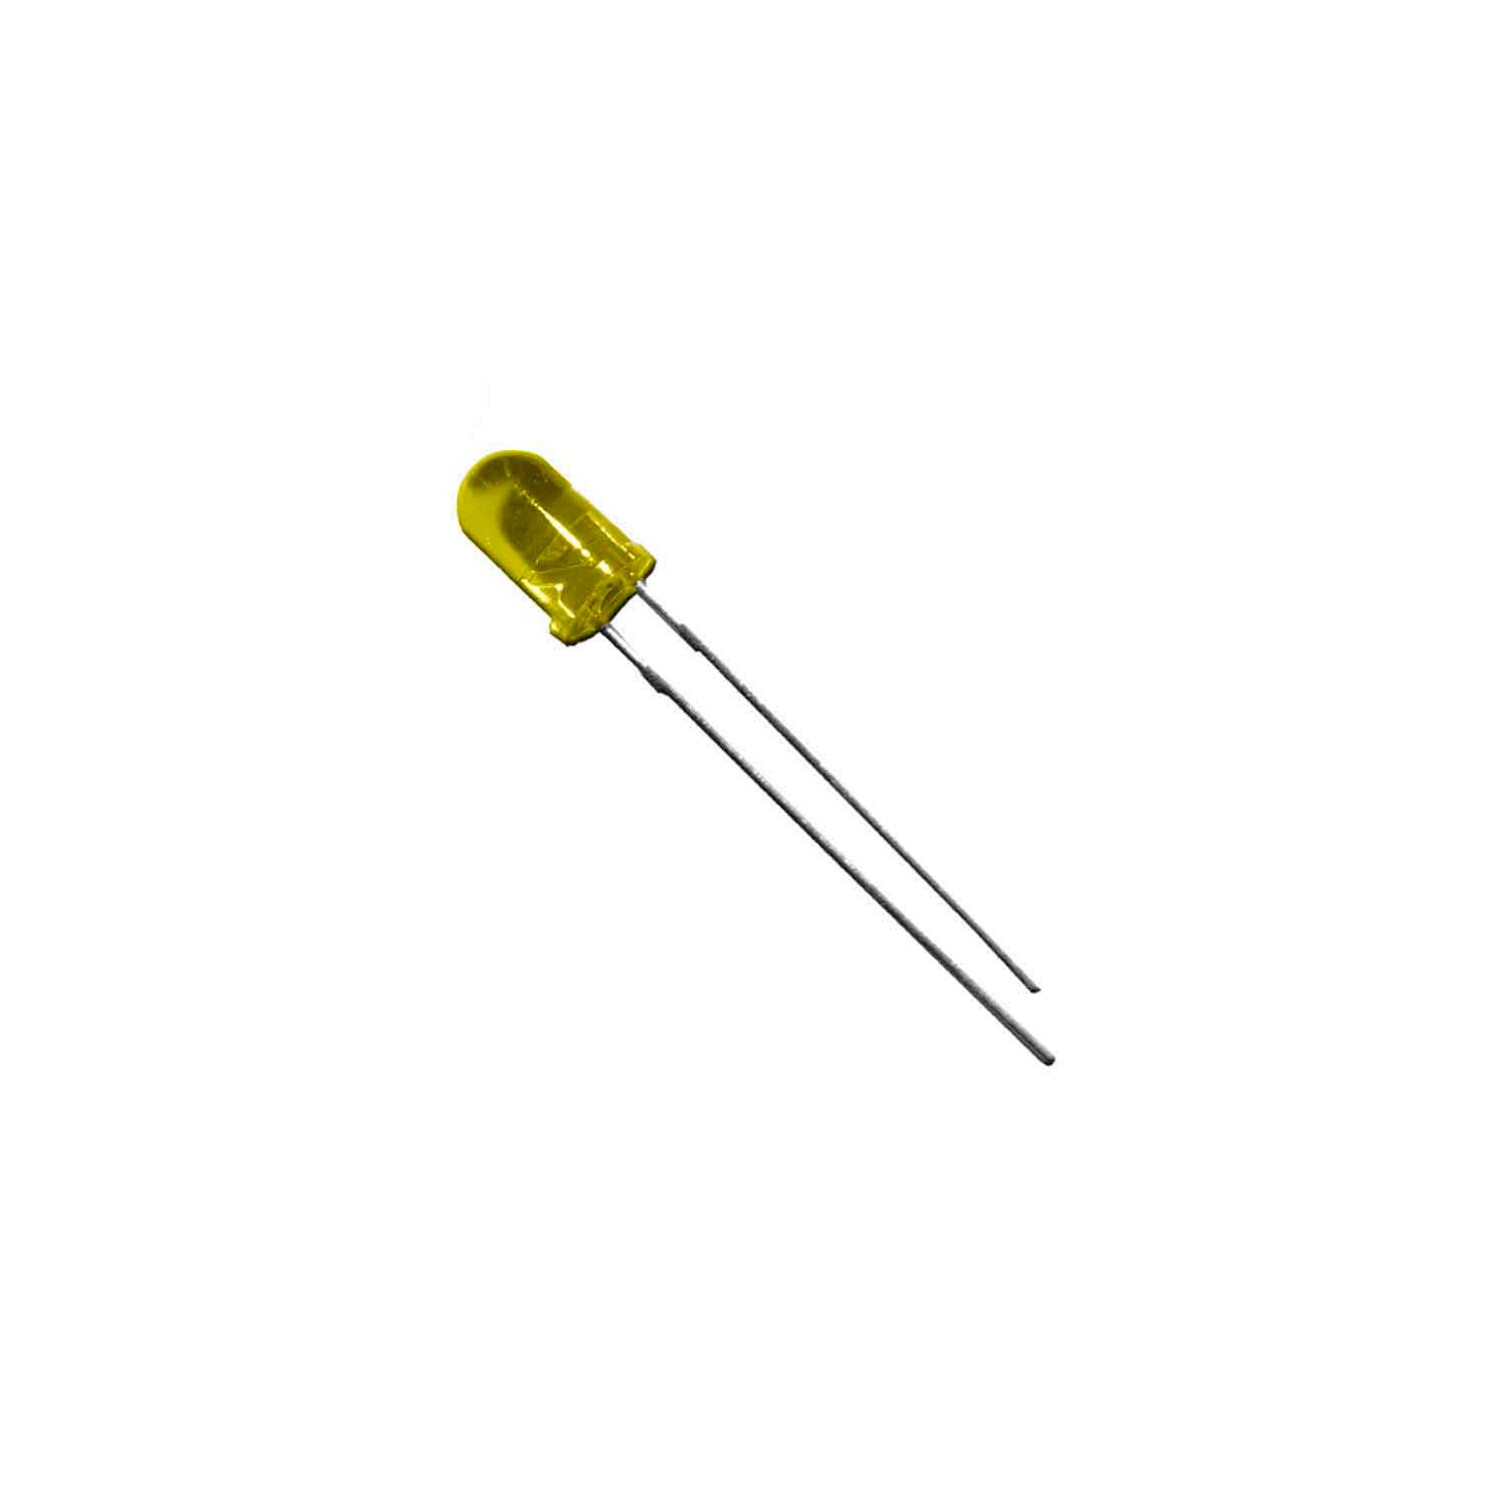 Diodo led color amarillo 5mm (manualidades) 1,9v edm